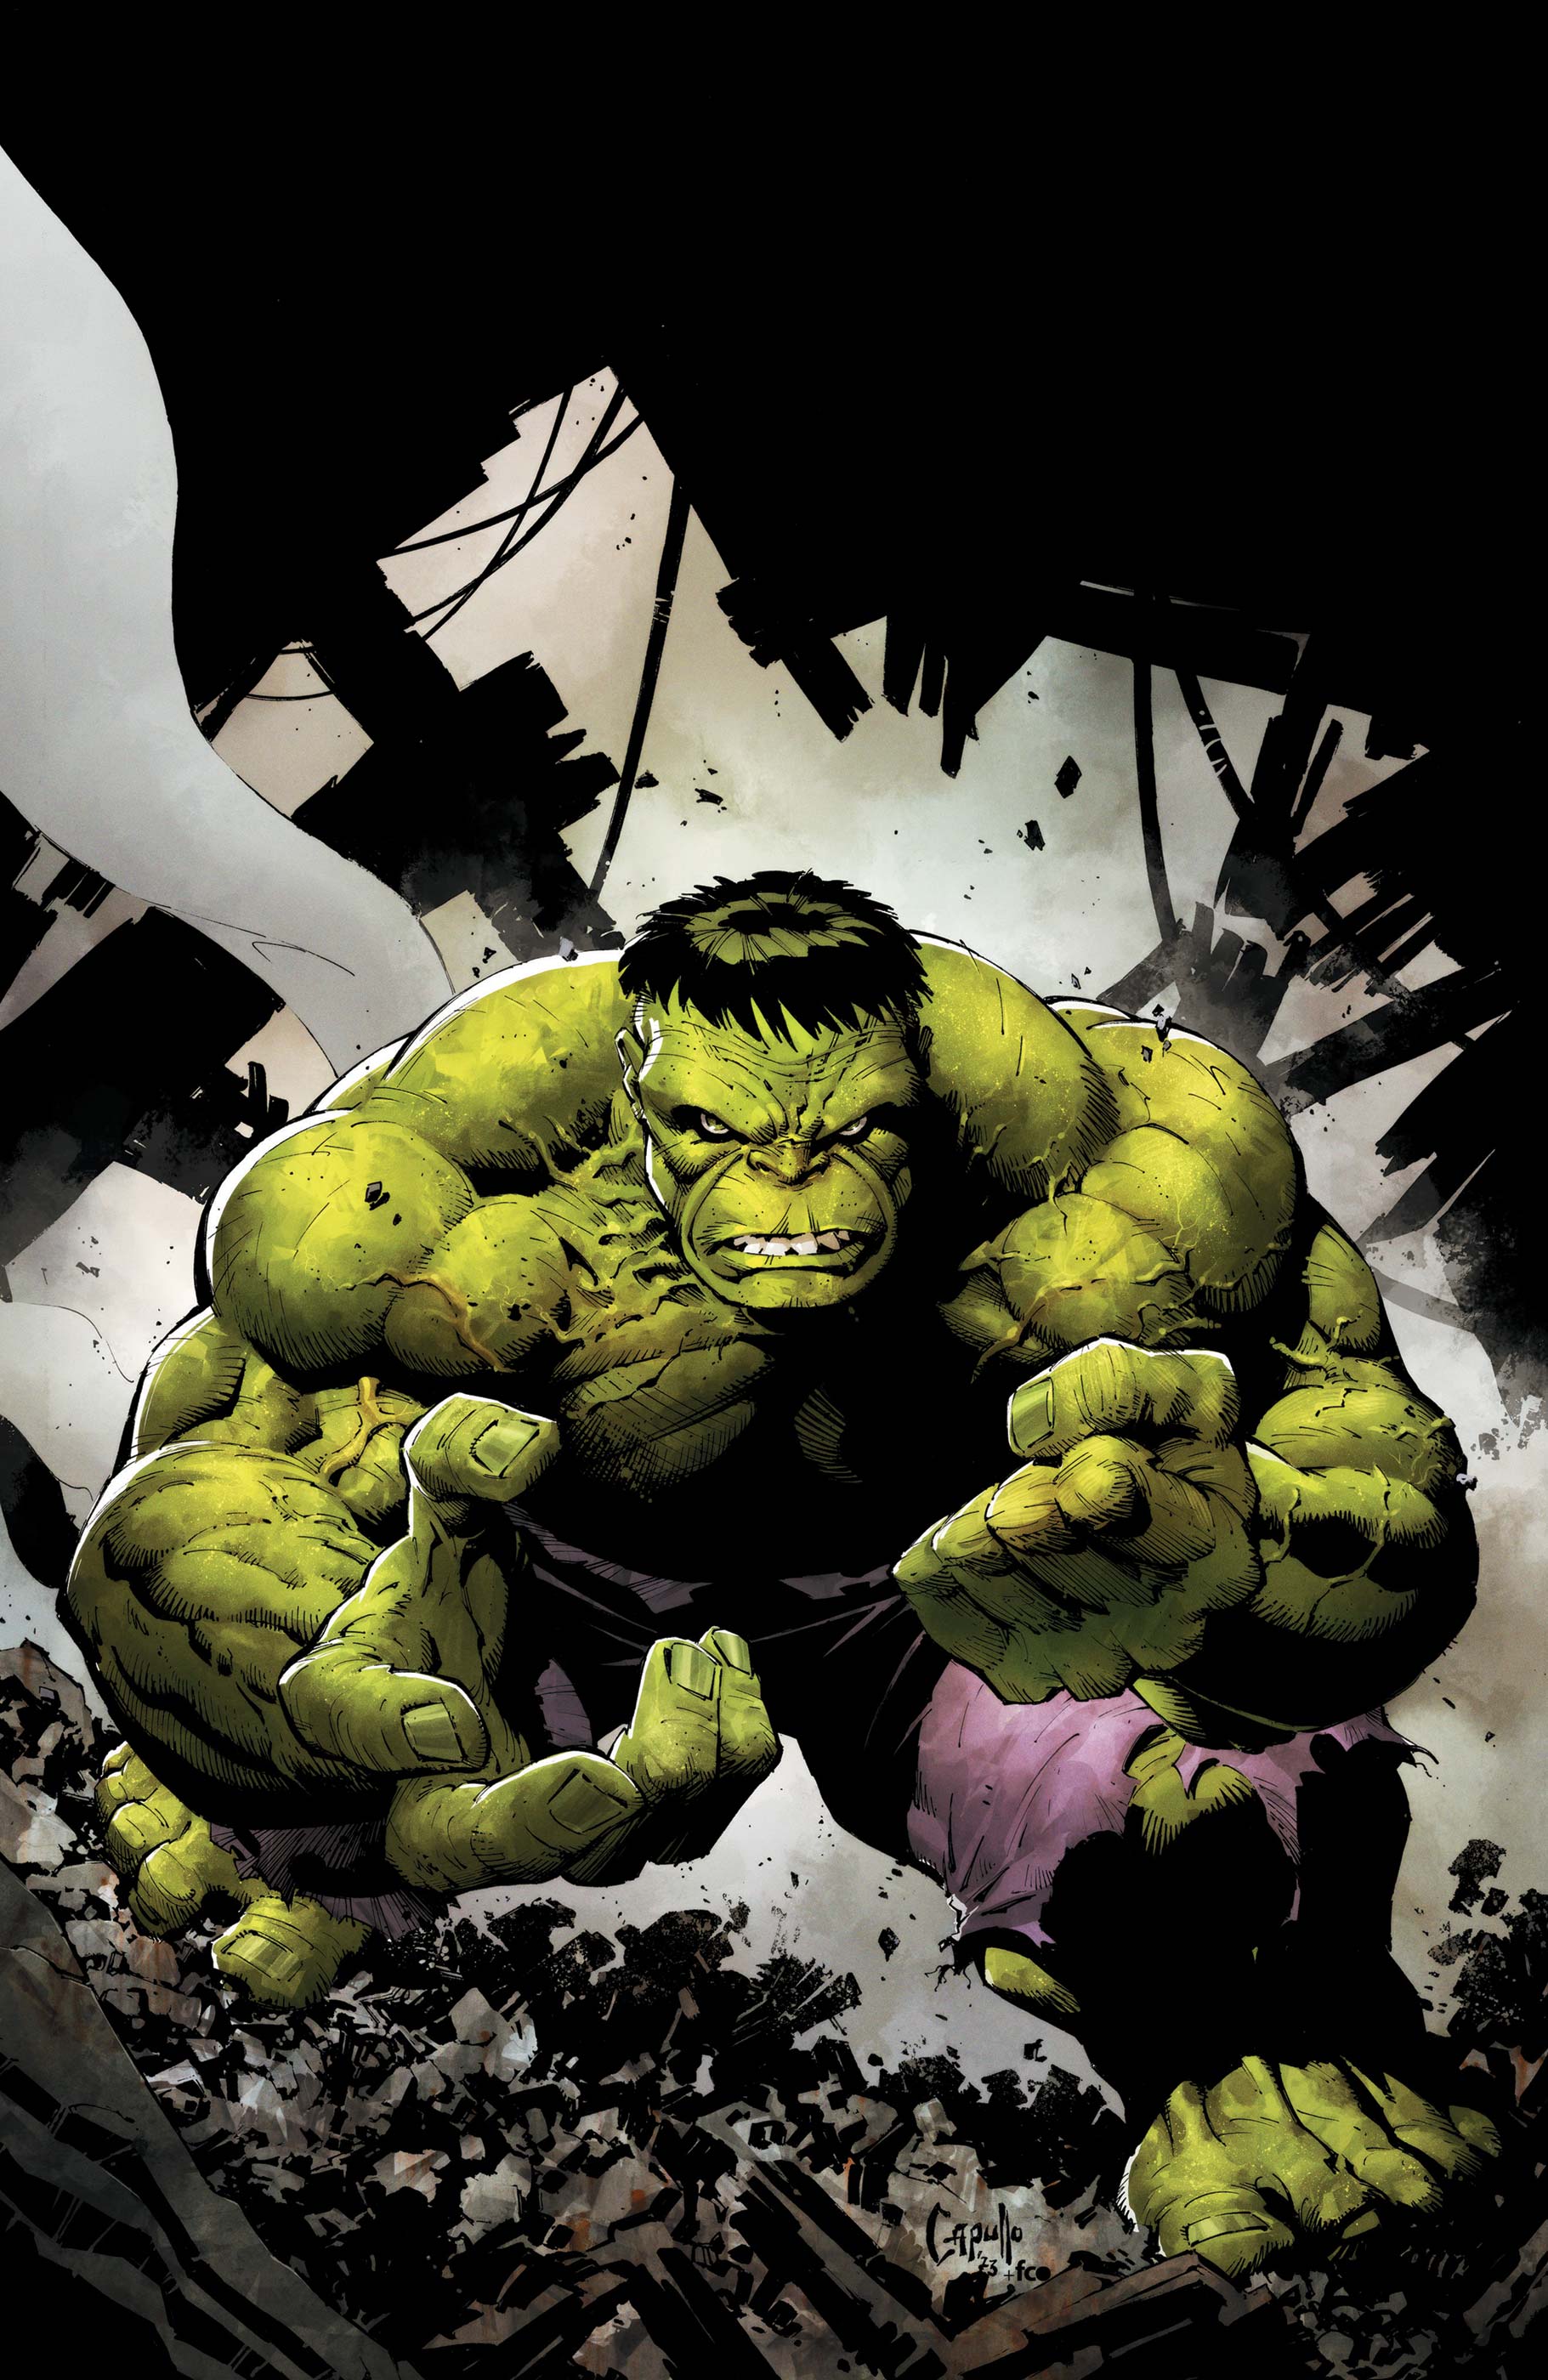 Incredible Hulk (2023) #9 (Variant)